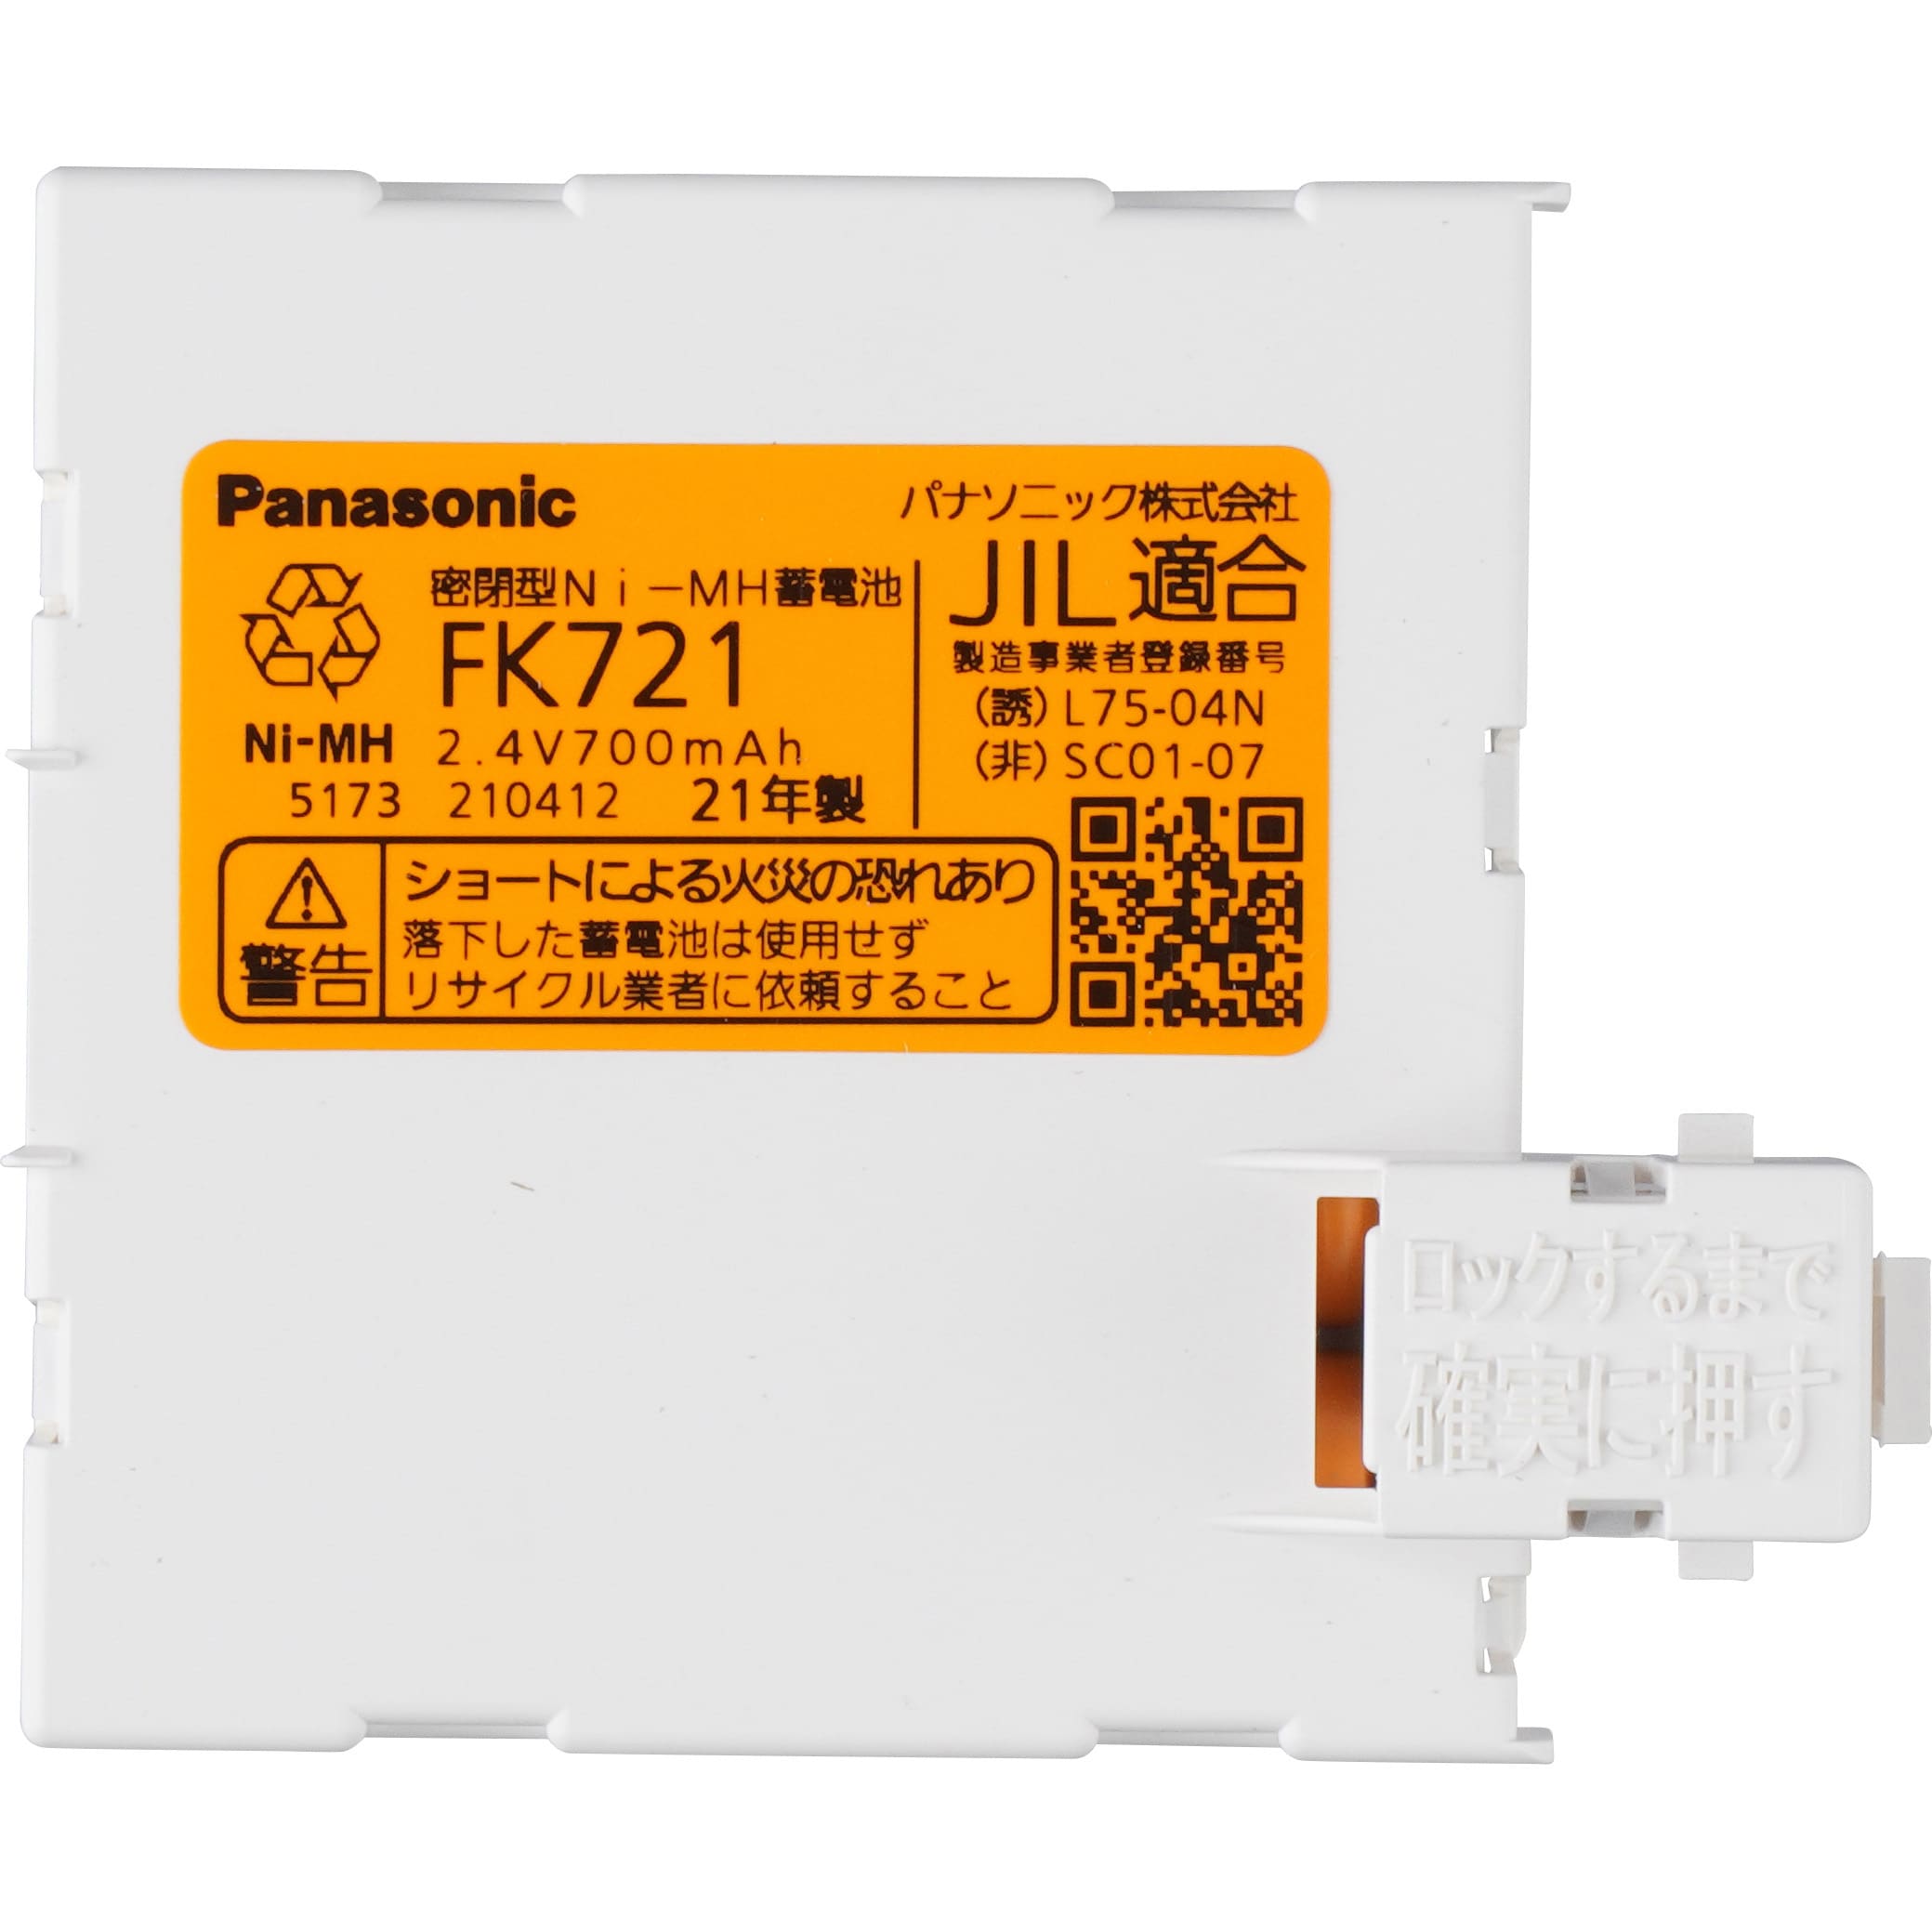 FK721 誘導灯・非常用照明器具用 畜電池 1個 パナソニック(Panasonic) 【通販サイトMonotaRO】